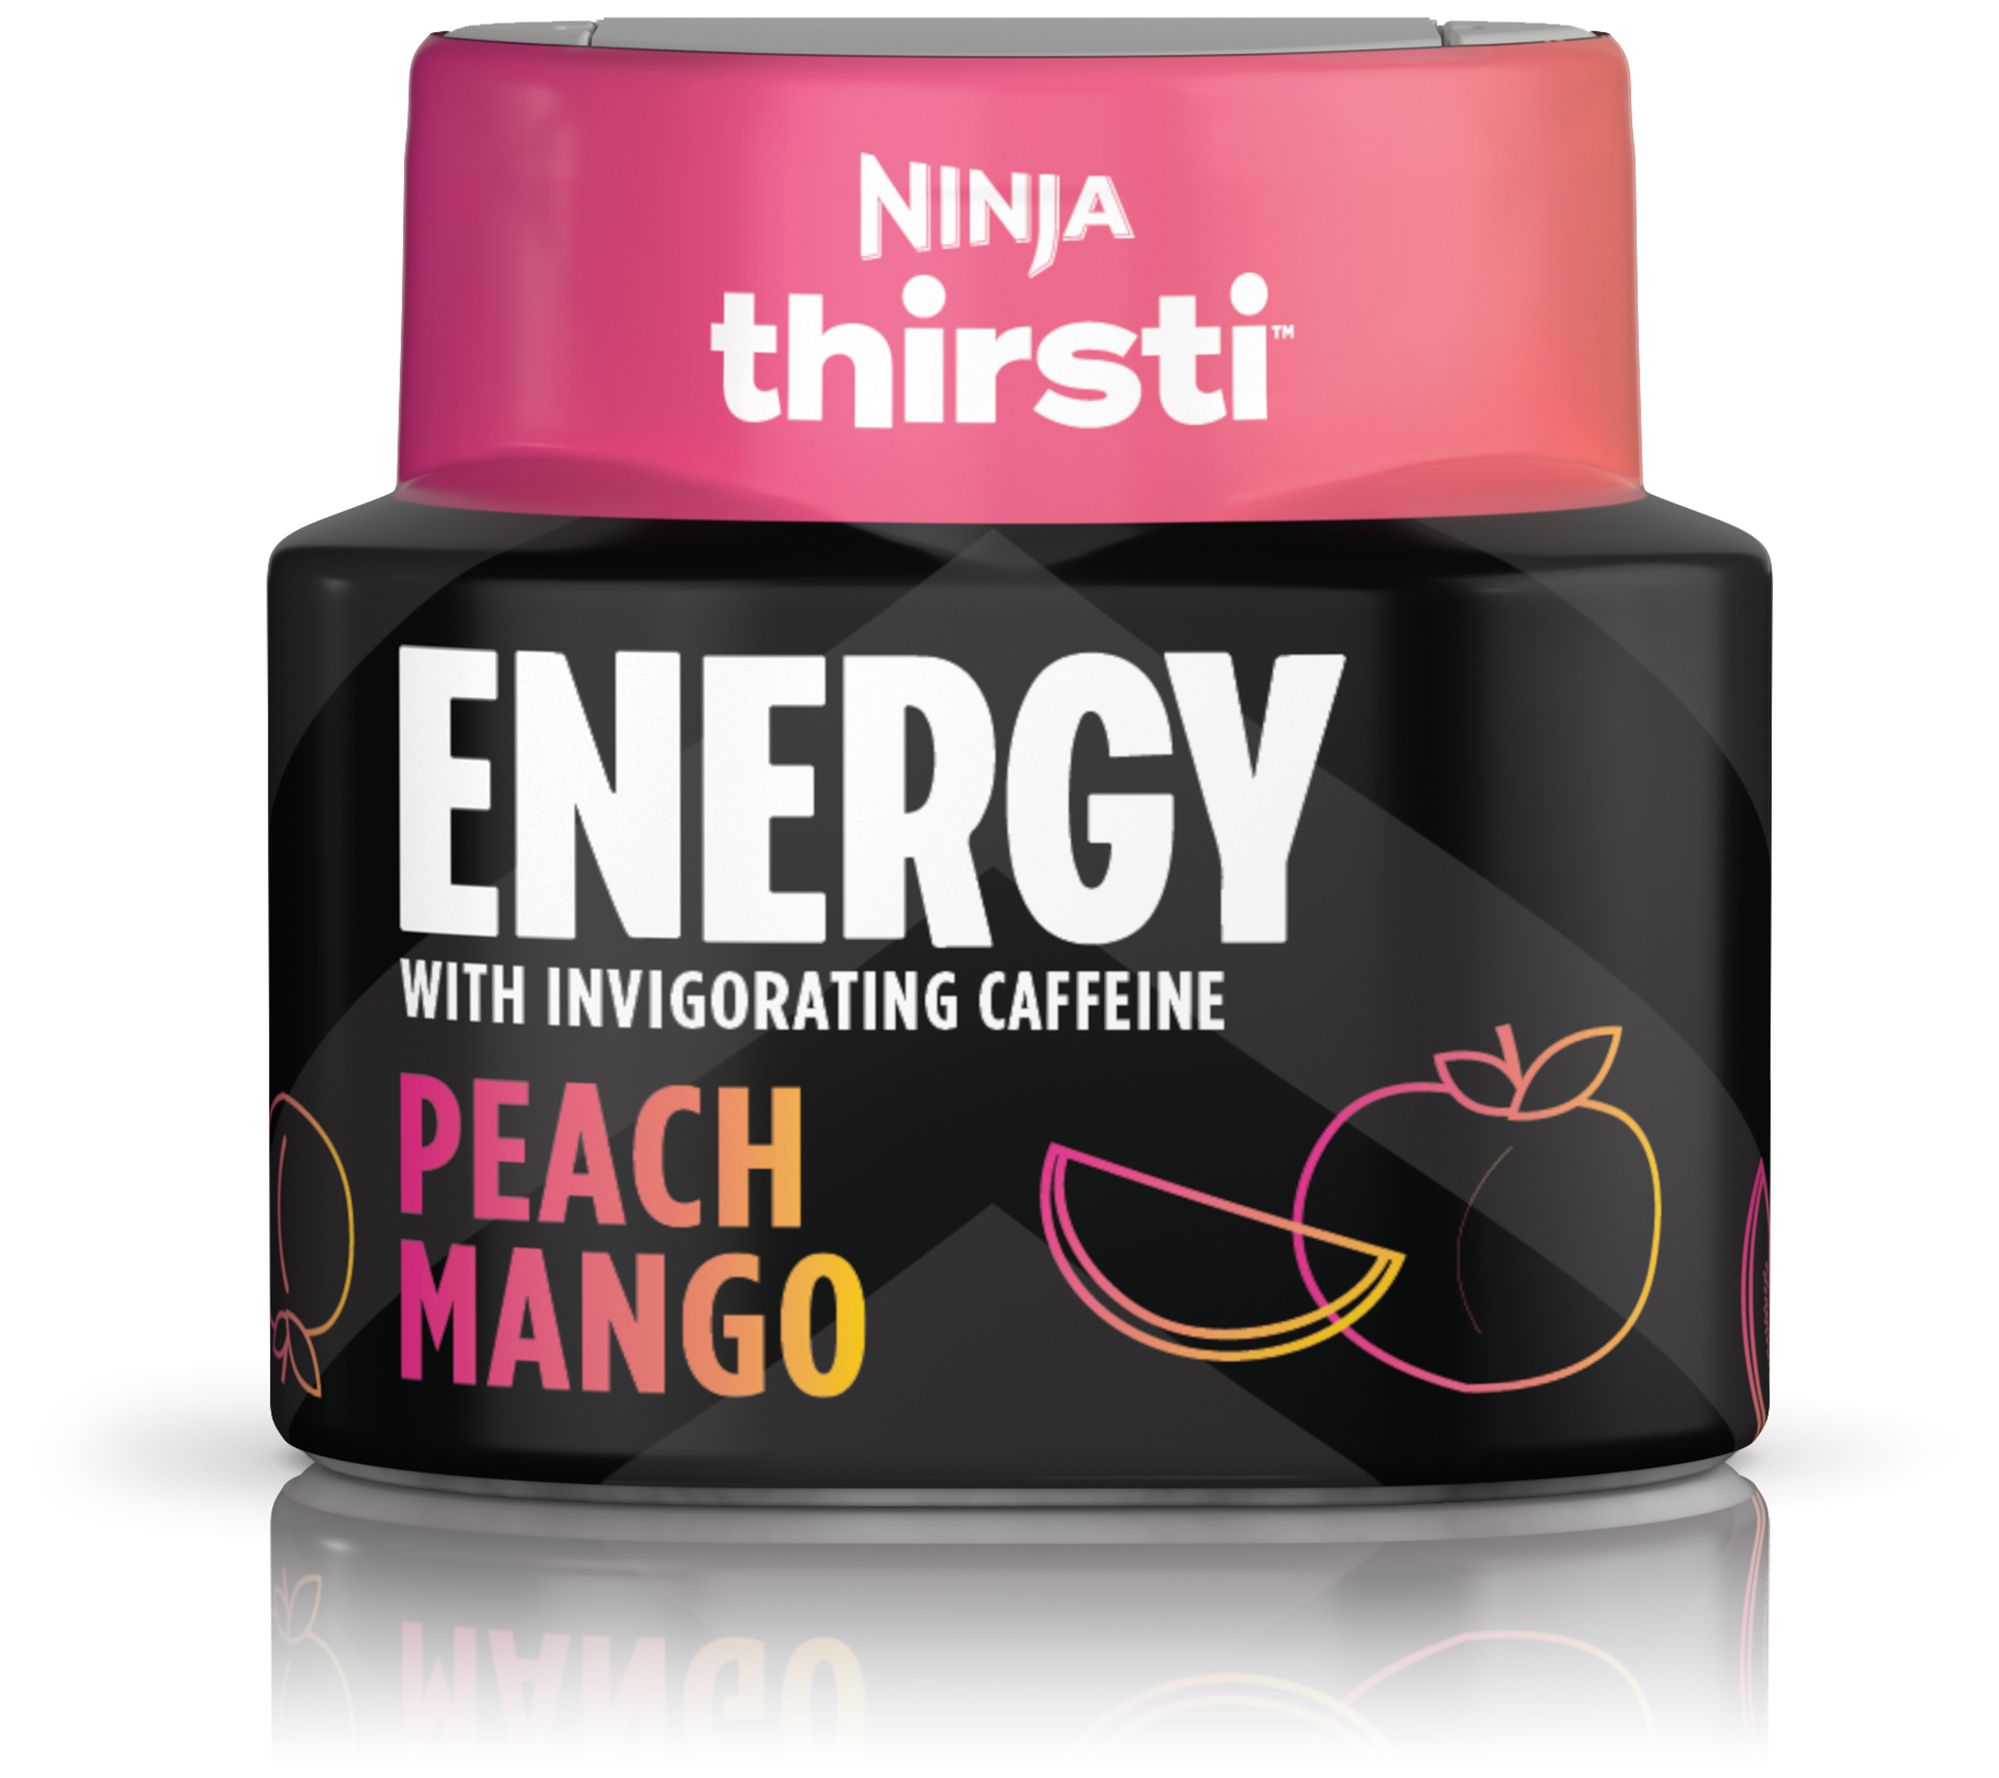 Unpack the Flavor: A Look Inside the Box (Ninja Thirsti™ Drink